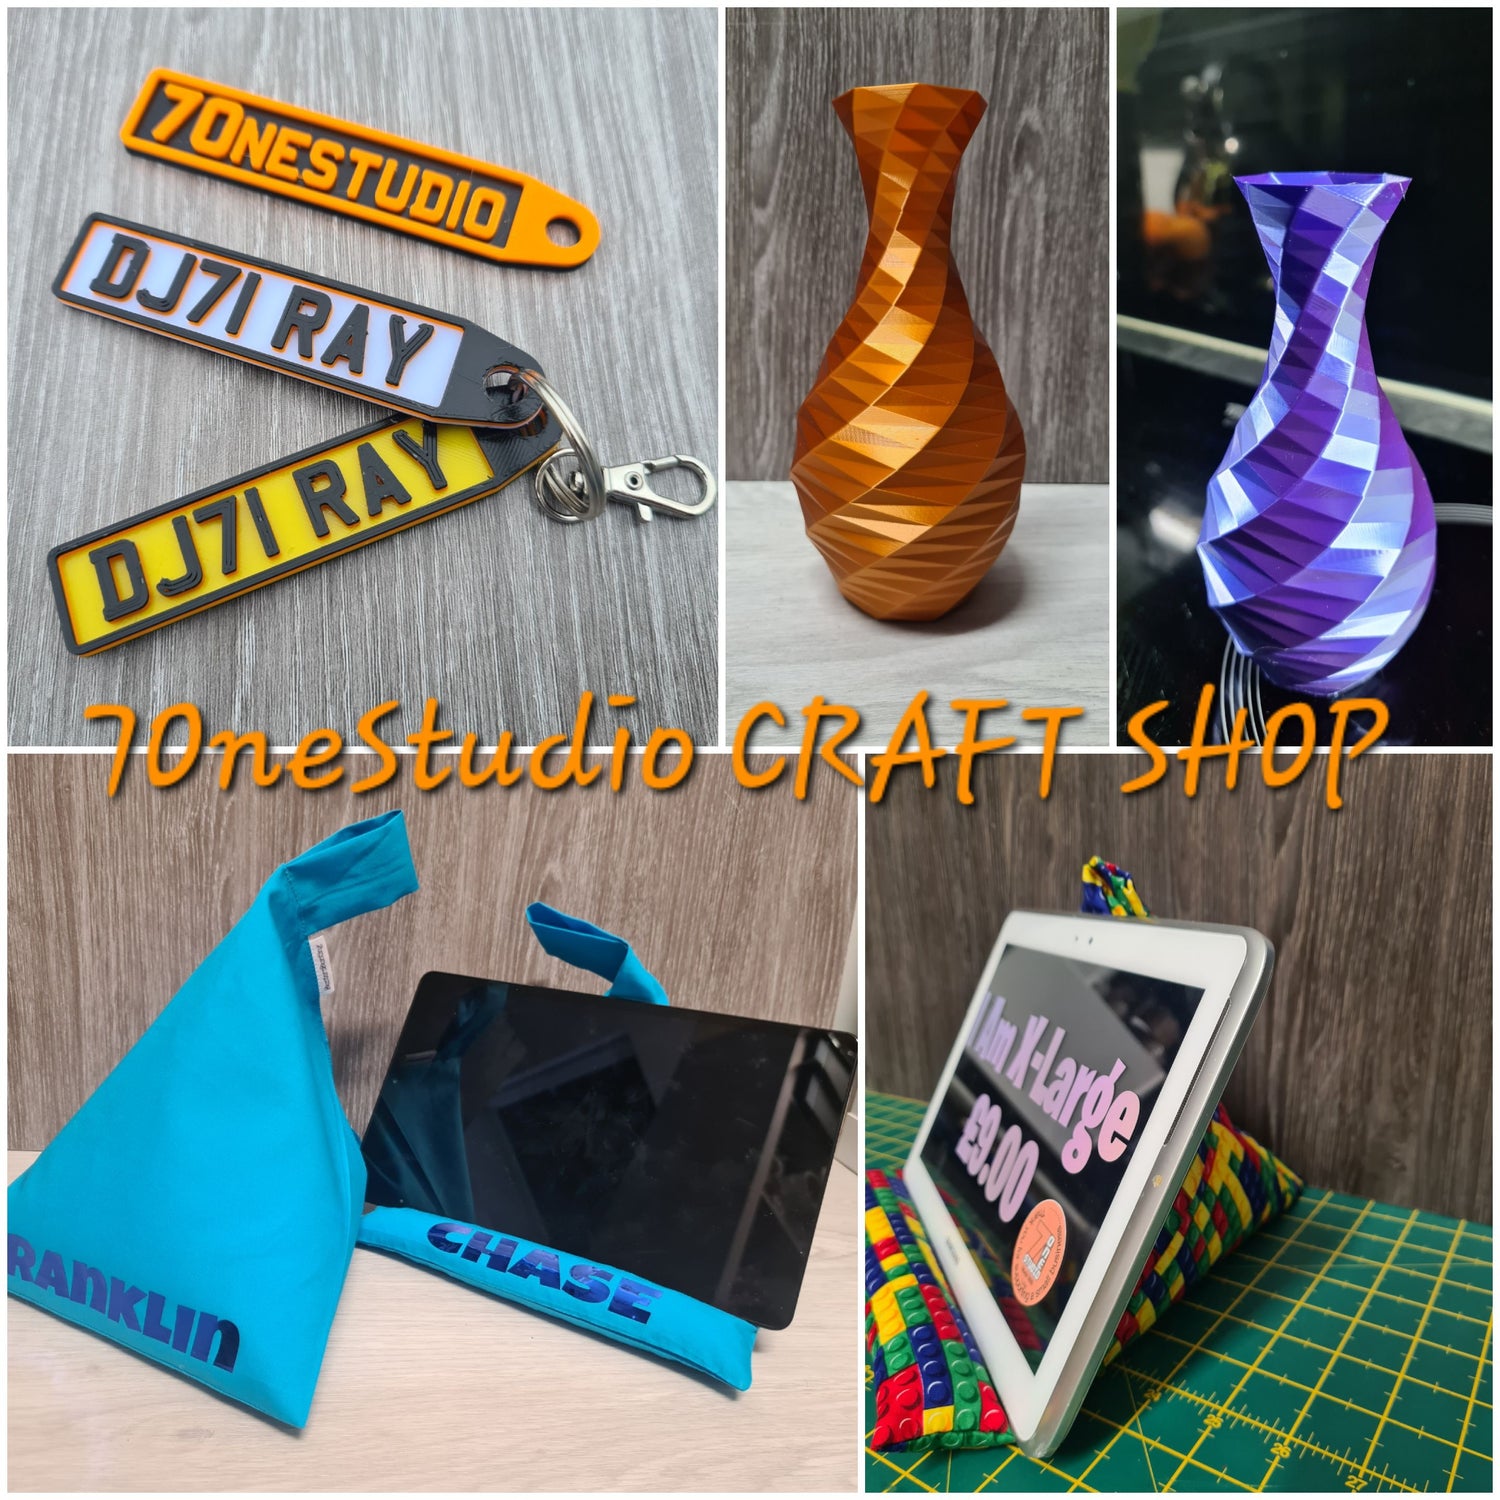 Our 7OneStudio Craft Shop